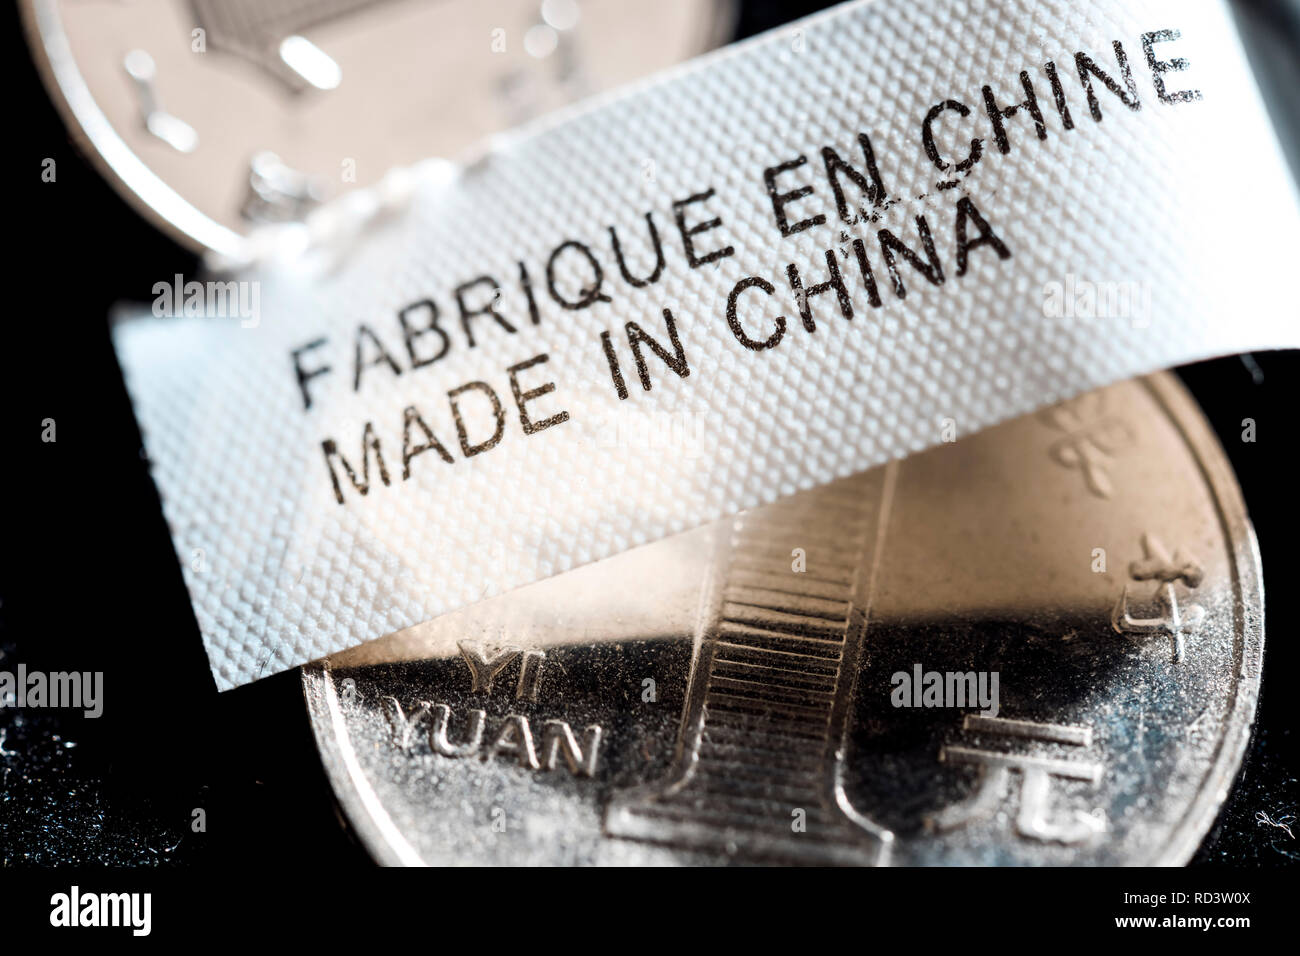 Etichetta verme in Cina e yuan cinese moneta, Etikett Made in China und chinesische Yuan-Münze Foto Stock